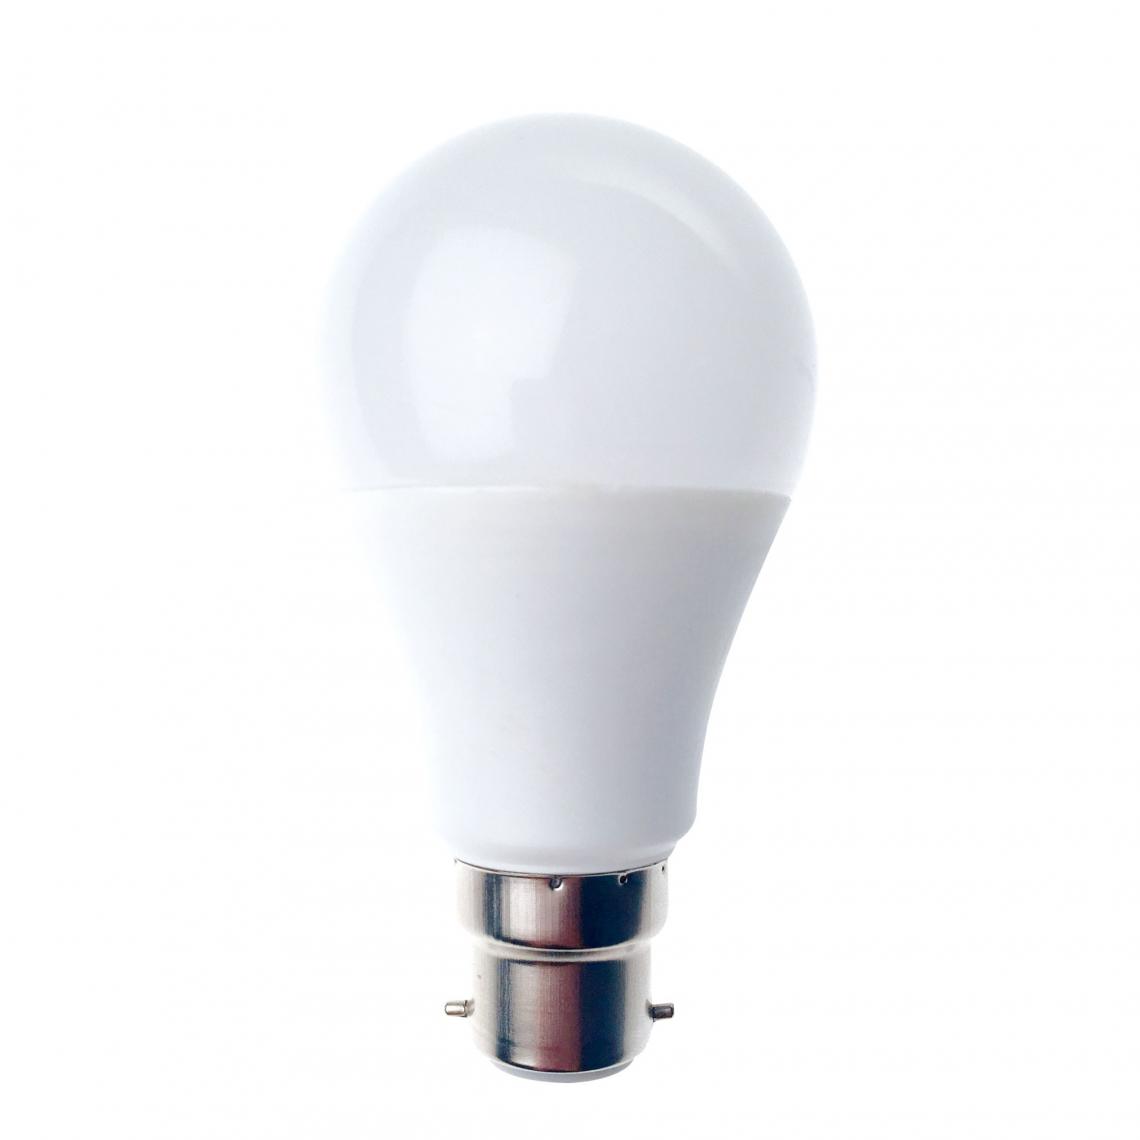 Velamp - Ampoule LED SMD, spot GU10, 230V, 6W / 470lm, 3000K, 38 ° - Ampoules LED